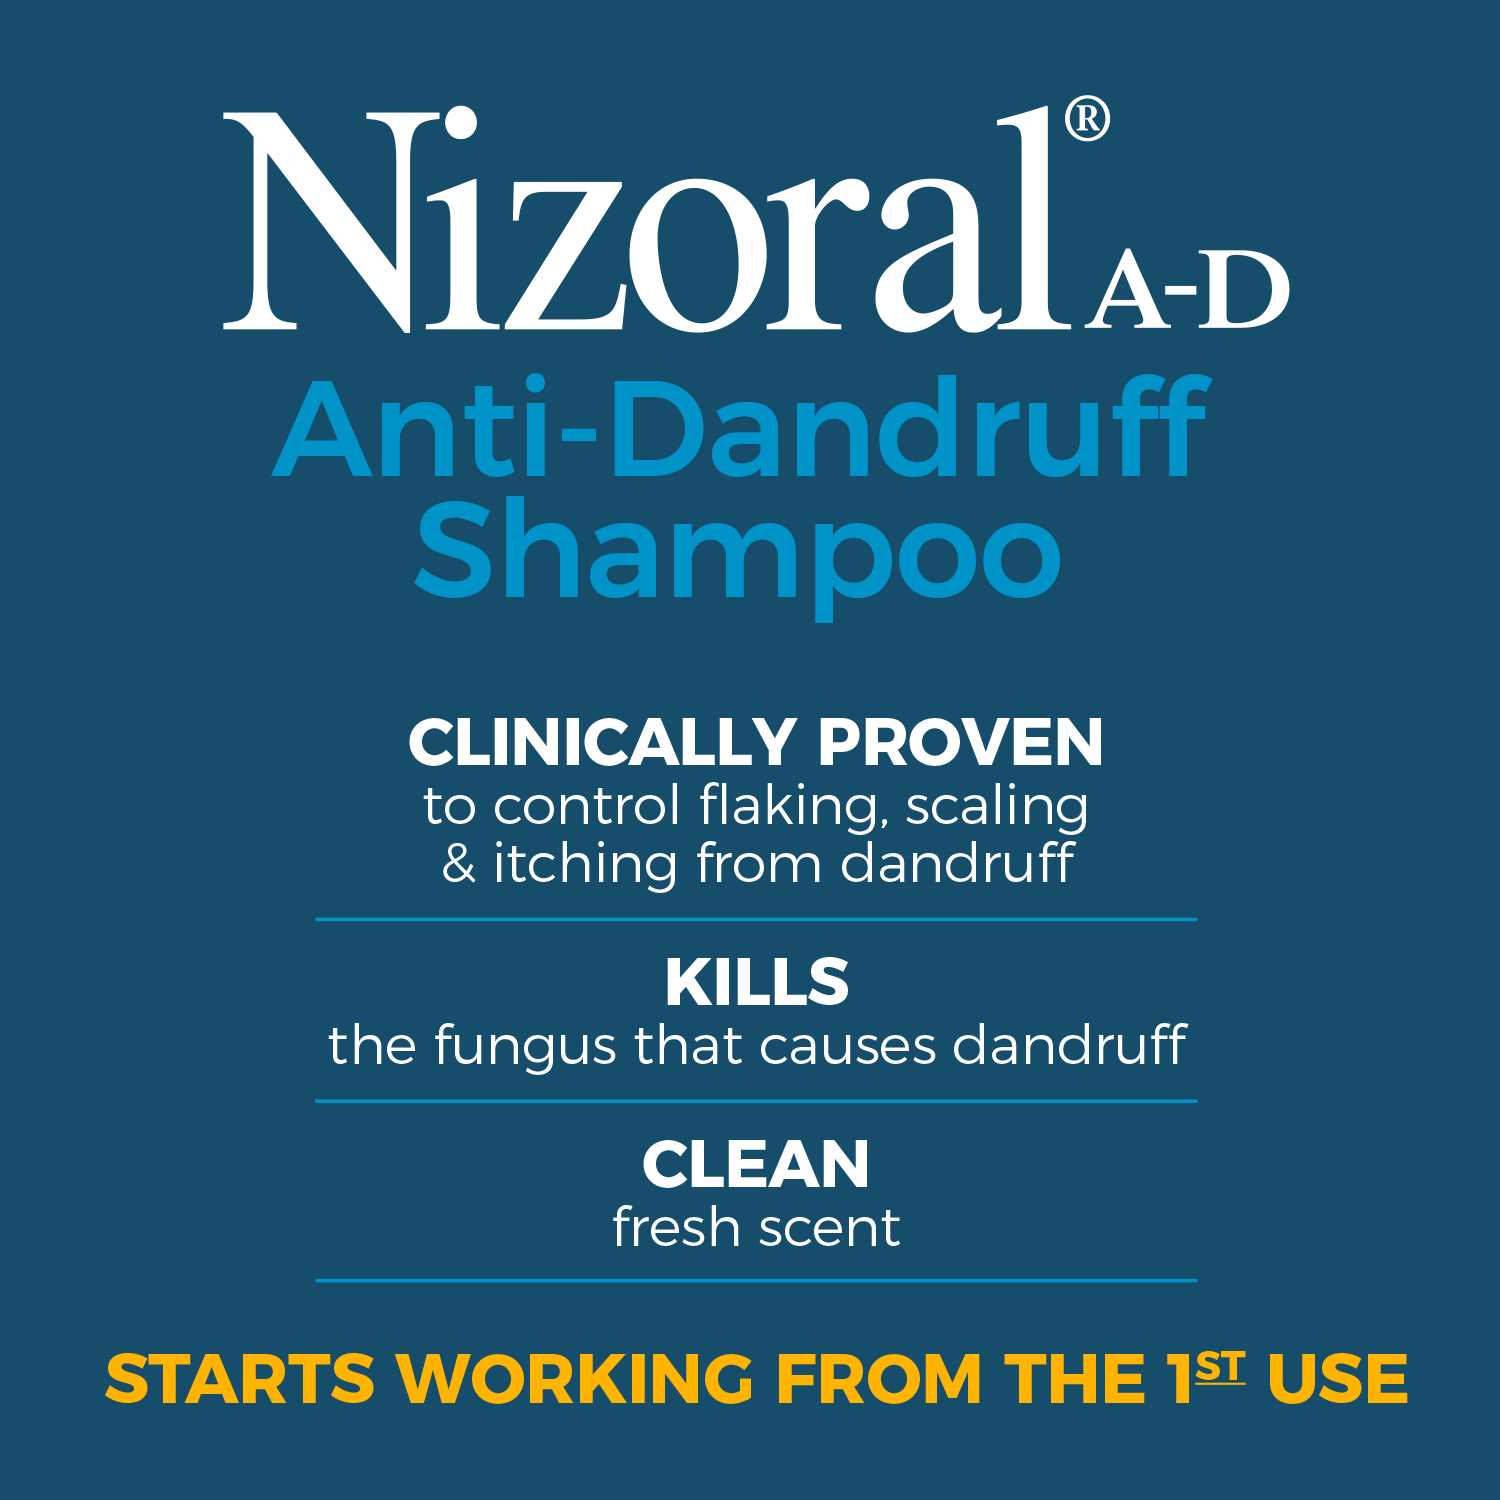 Nizoral A-D Anti-Dandruff Shampoo, 7 fl oz - image 4 of 8